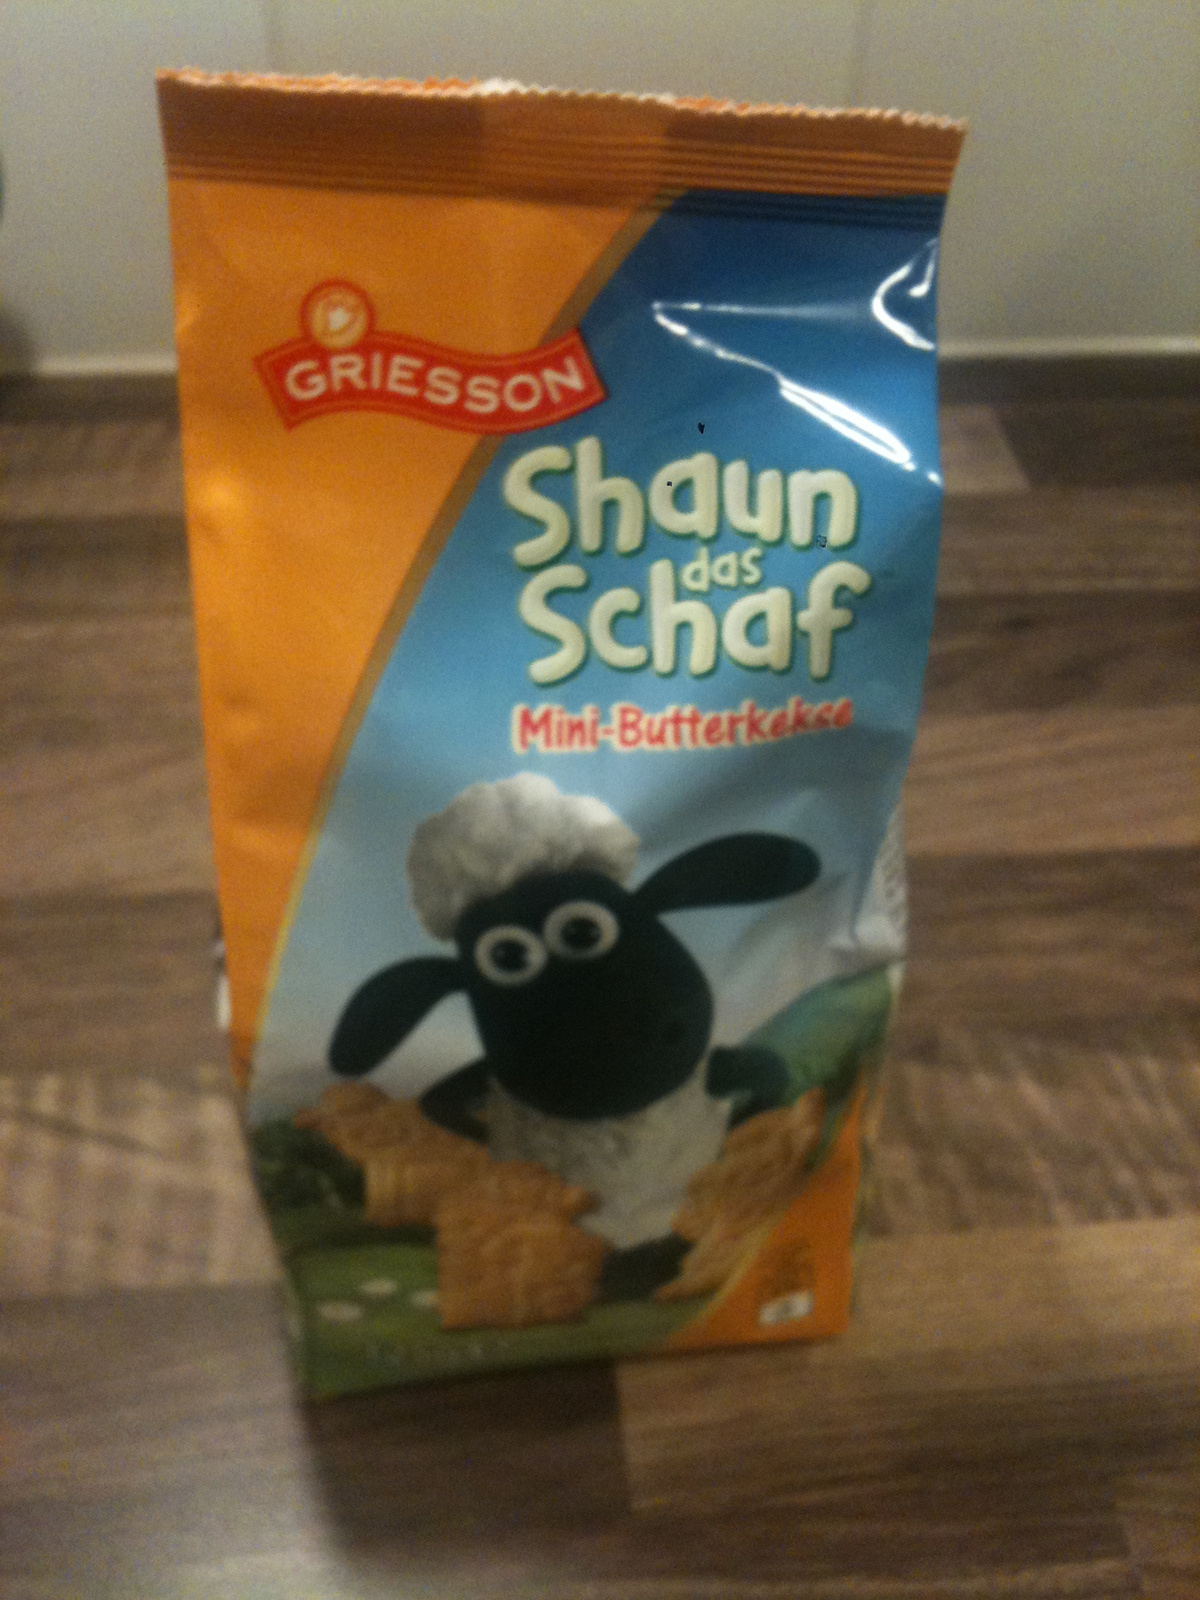 It's Shaun the sheep